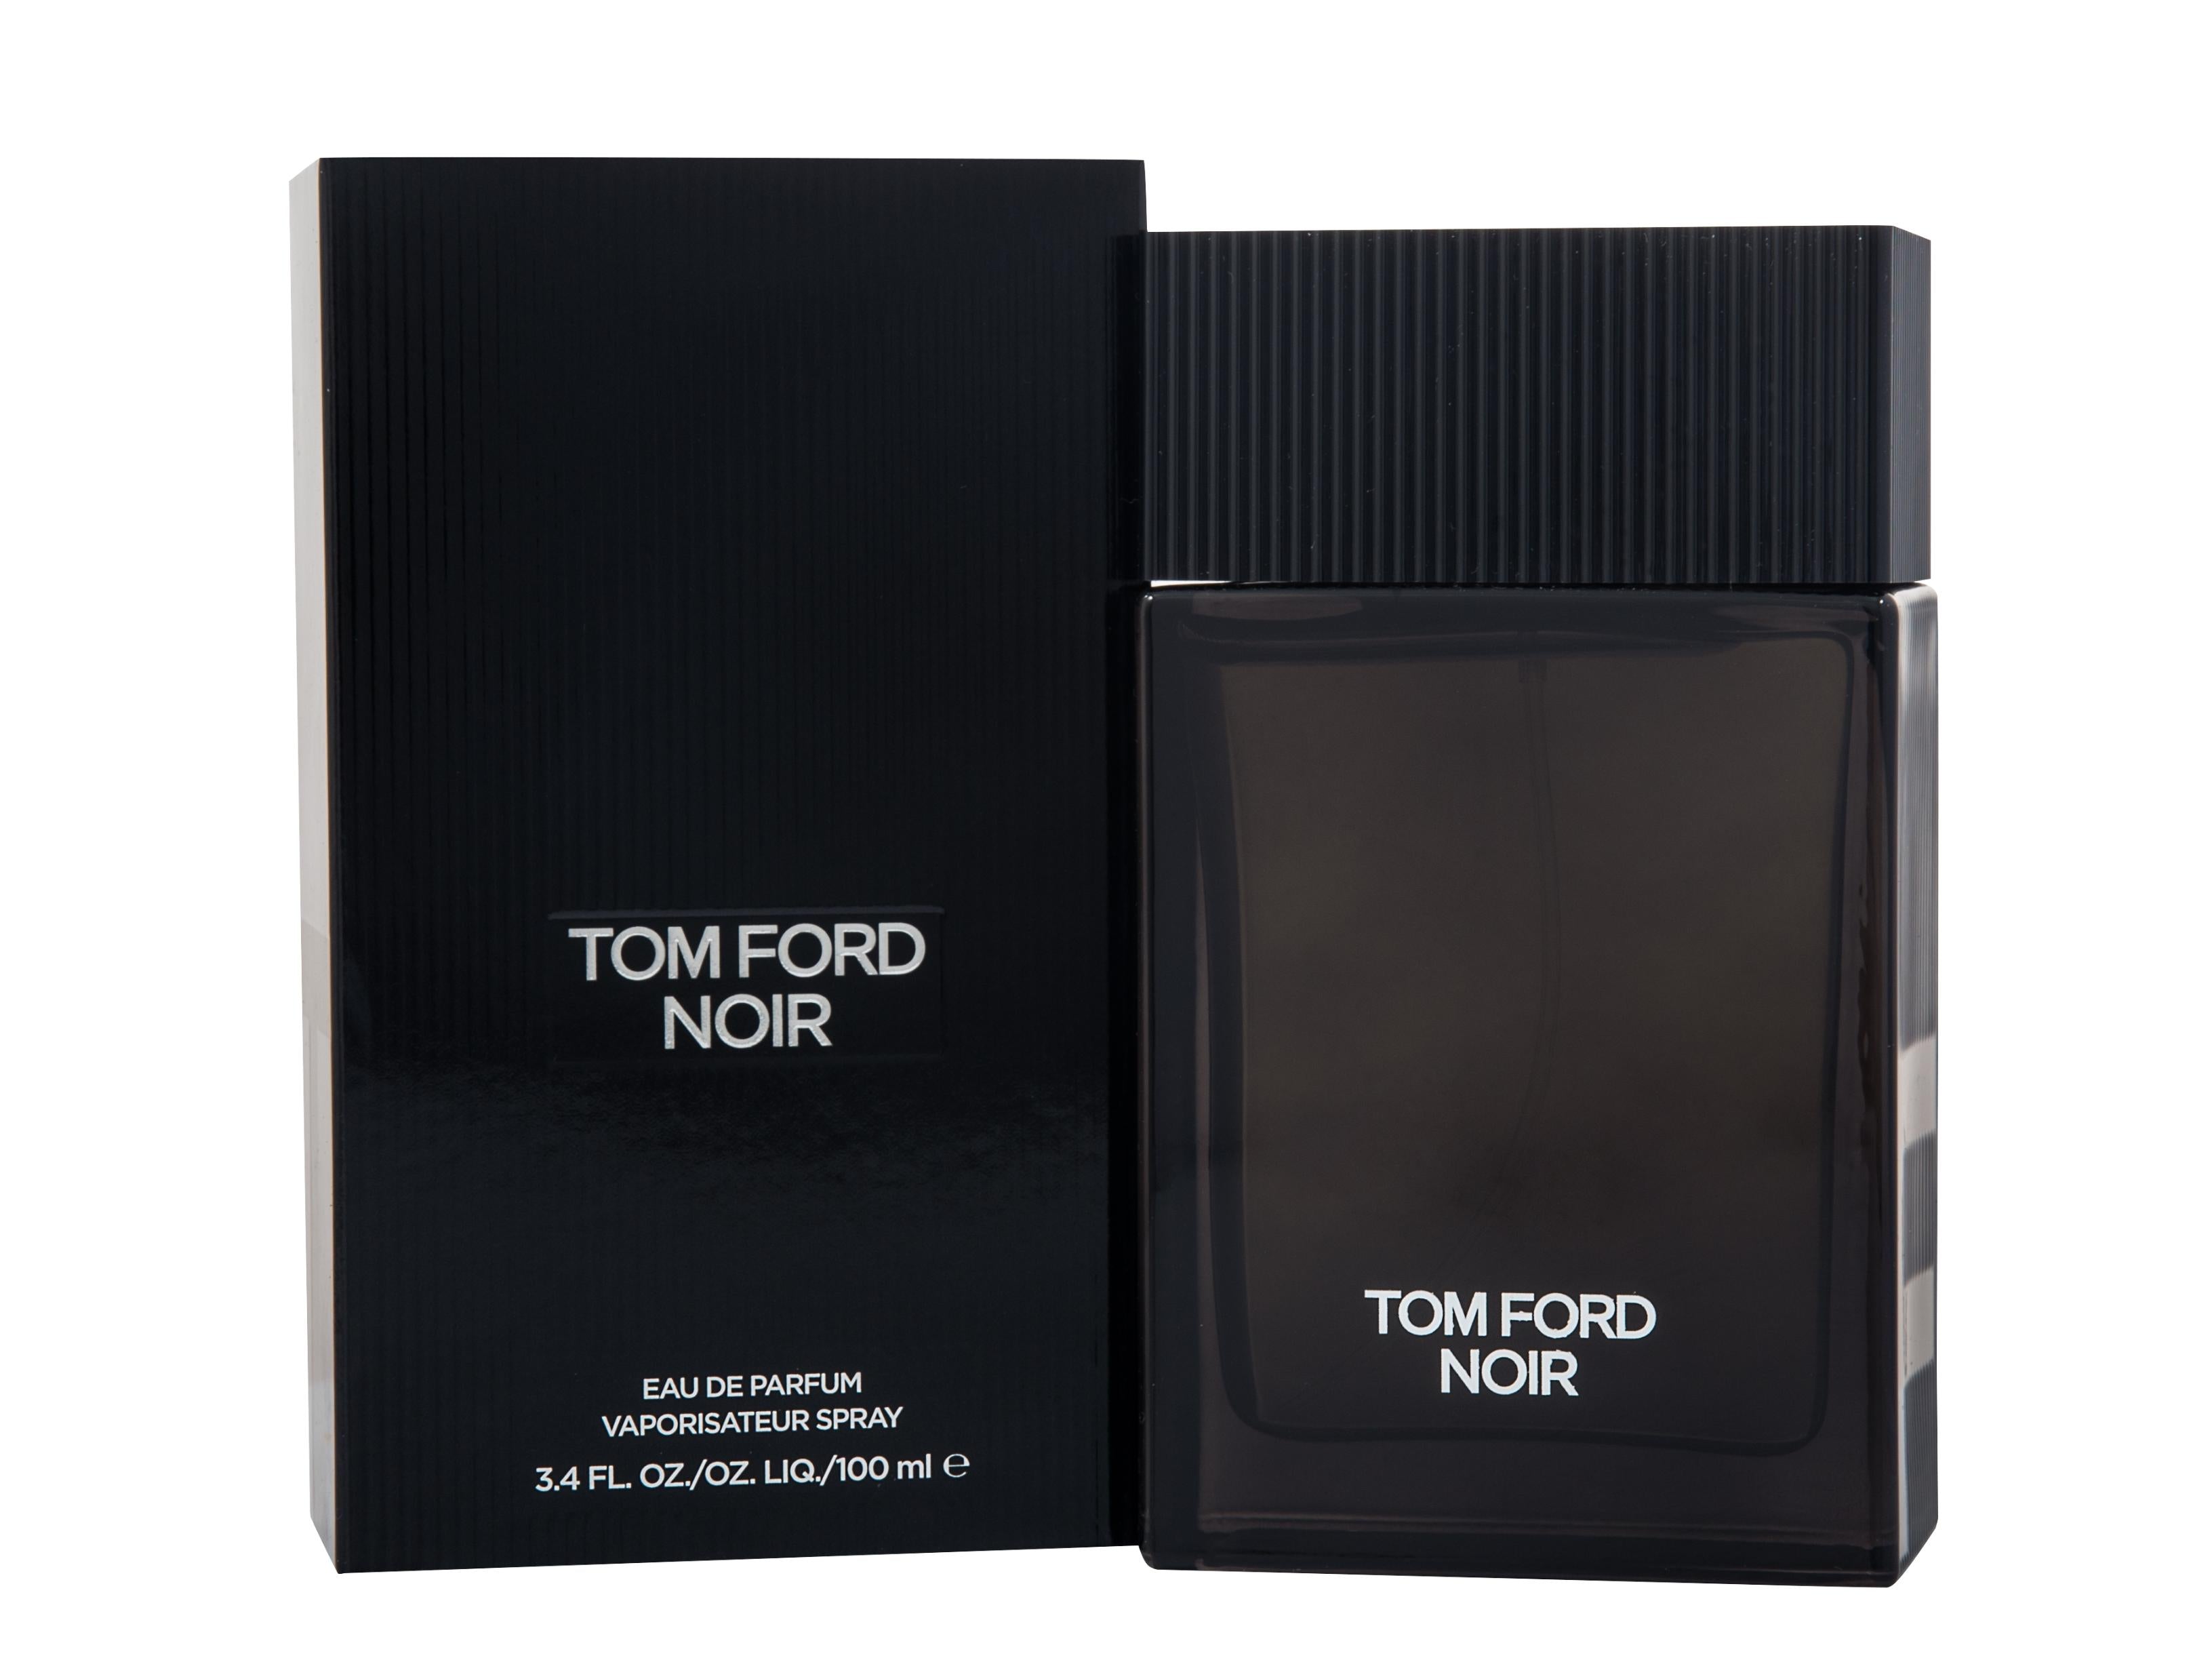 View Tom Ford Noir Eau de Parfum 100ml Spray information